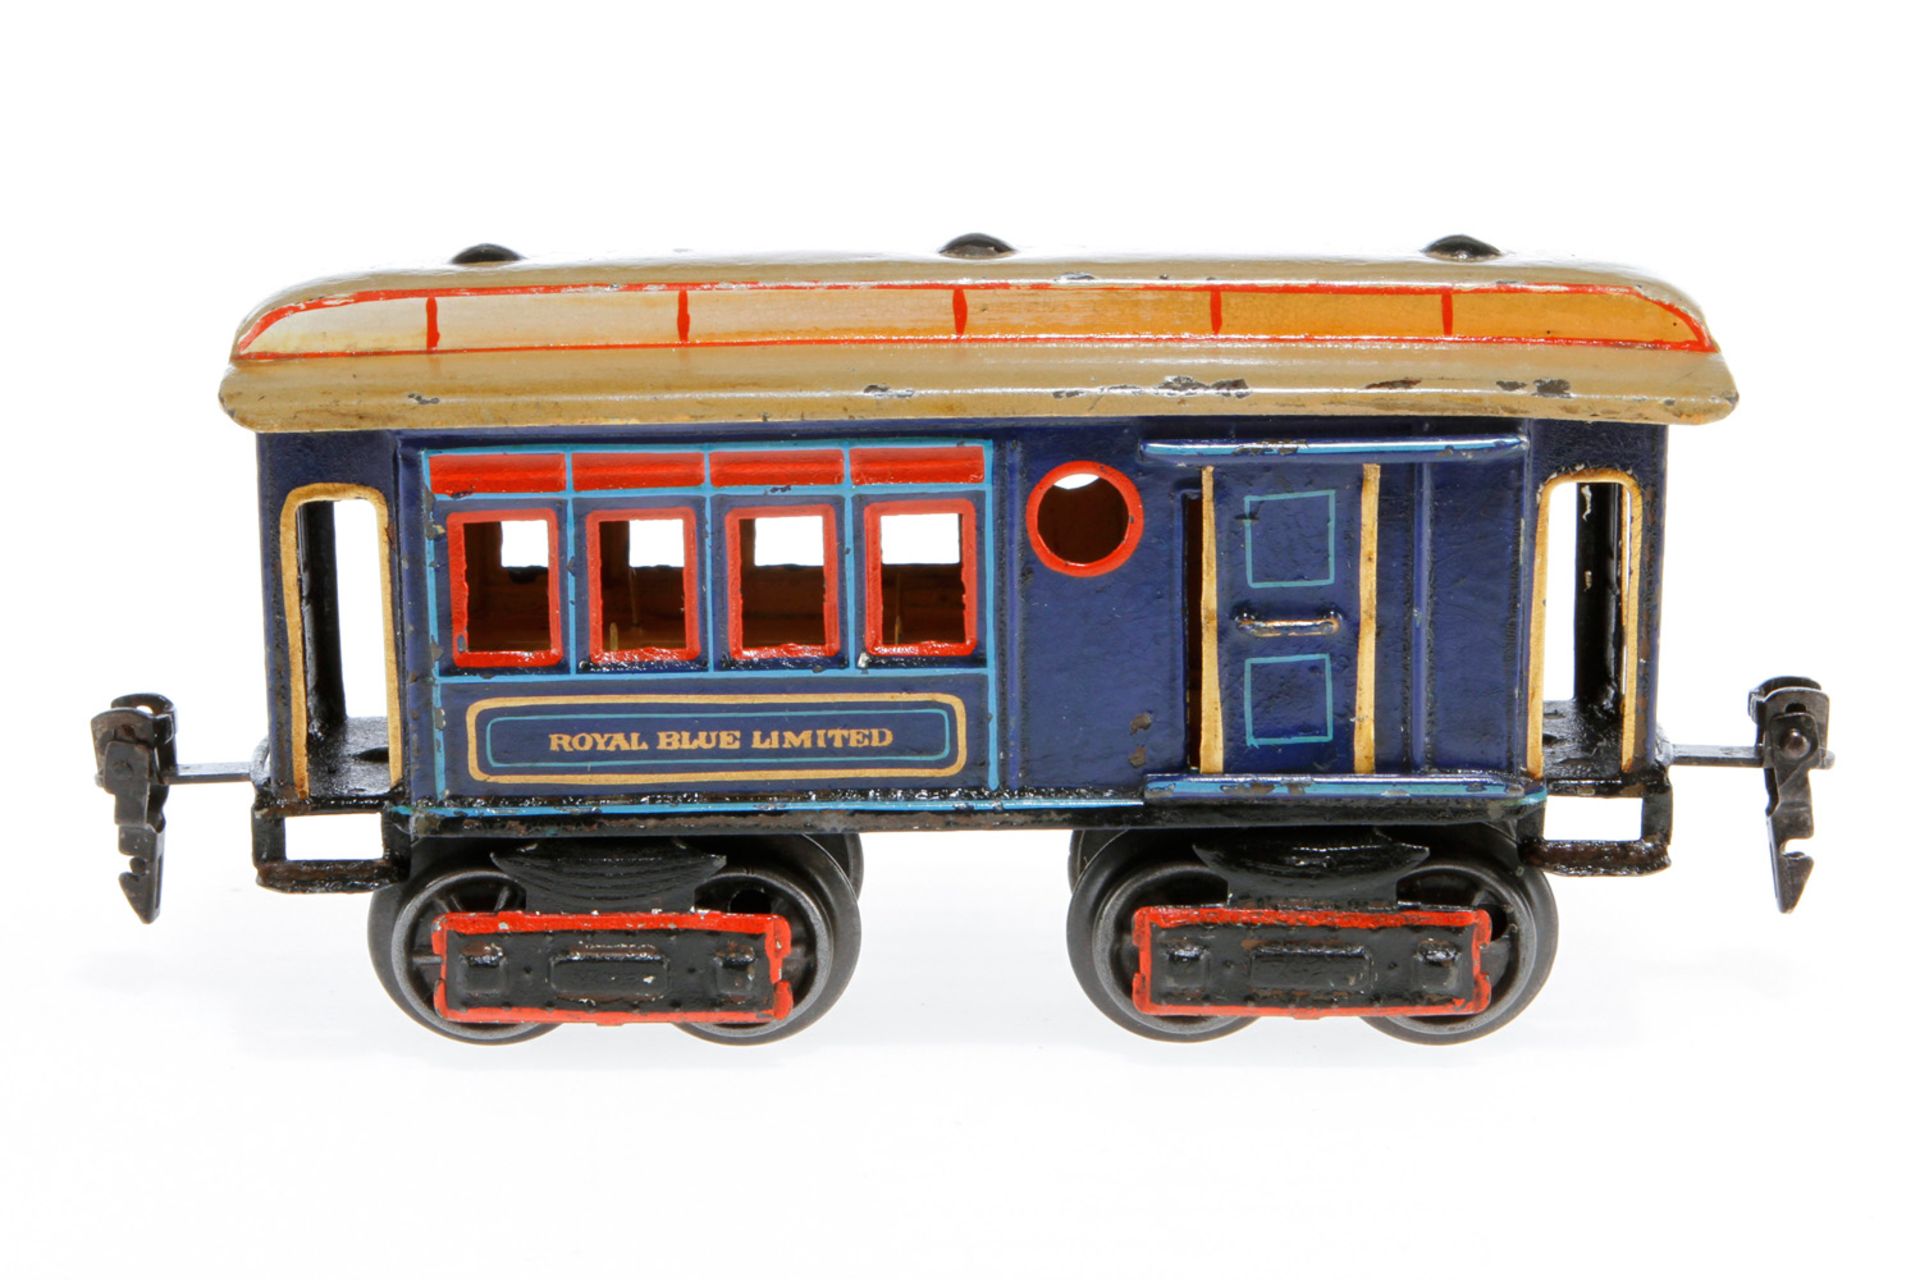 Märklin amerik. Raucher-/Gepäckwagen "Royal Blue Limited" 1883, S 0, uralt, blau HL, mit 2